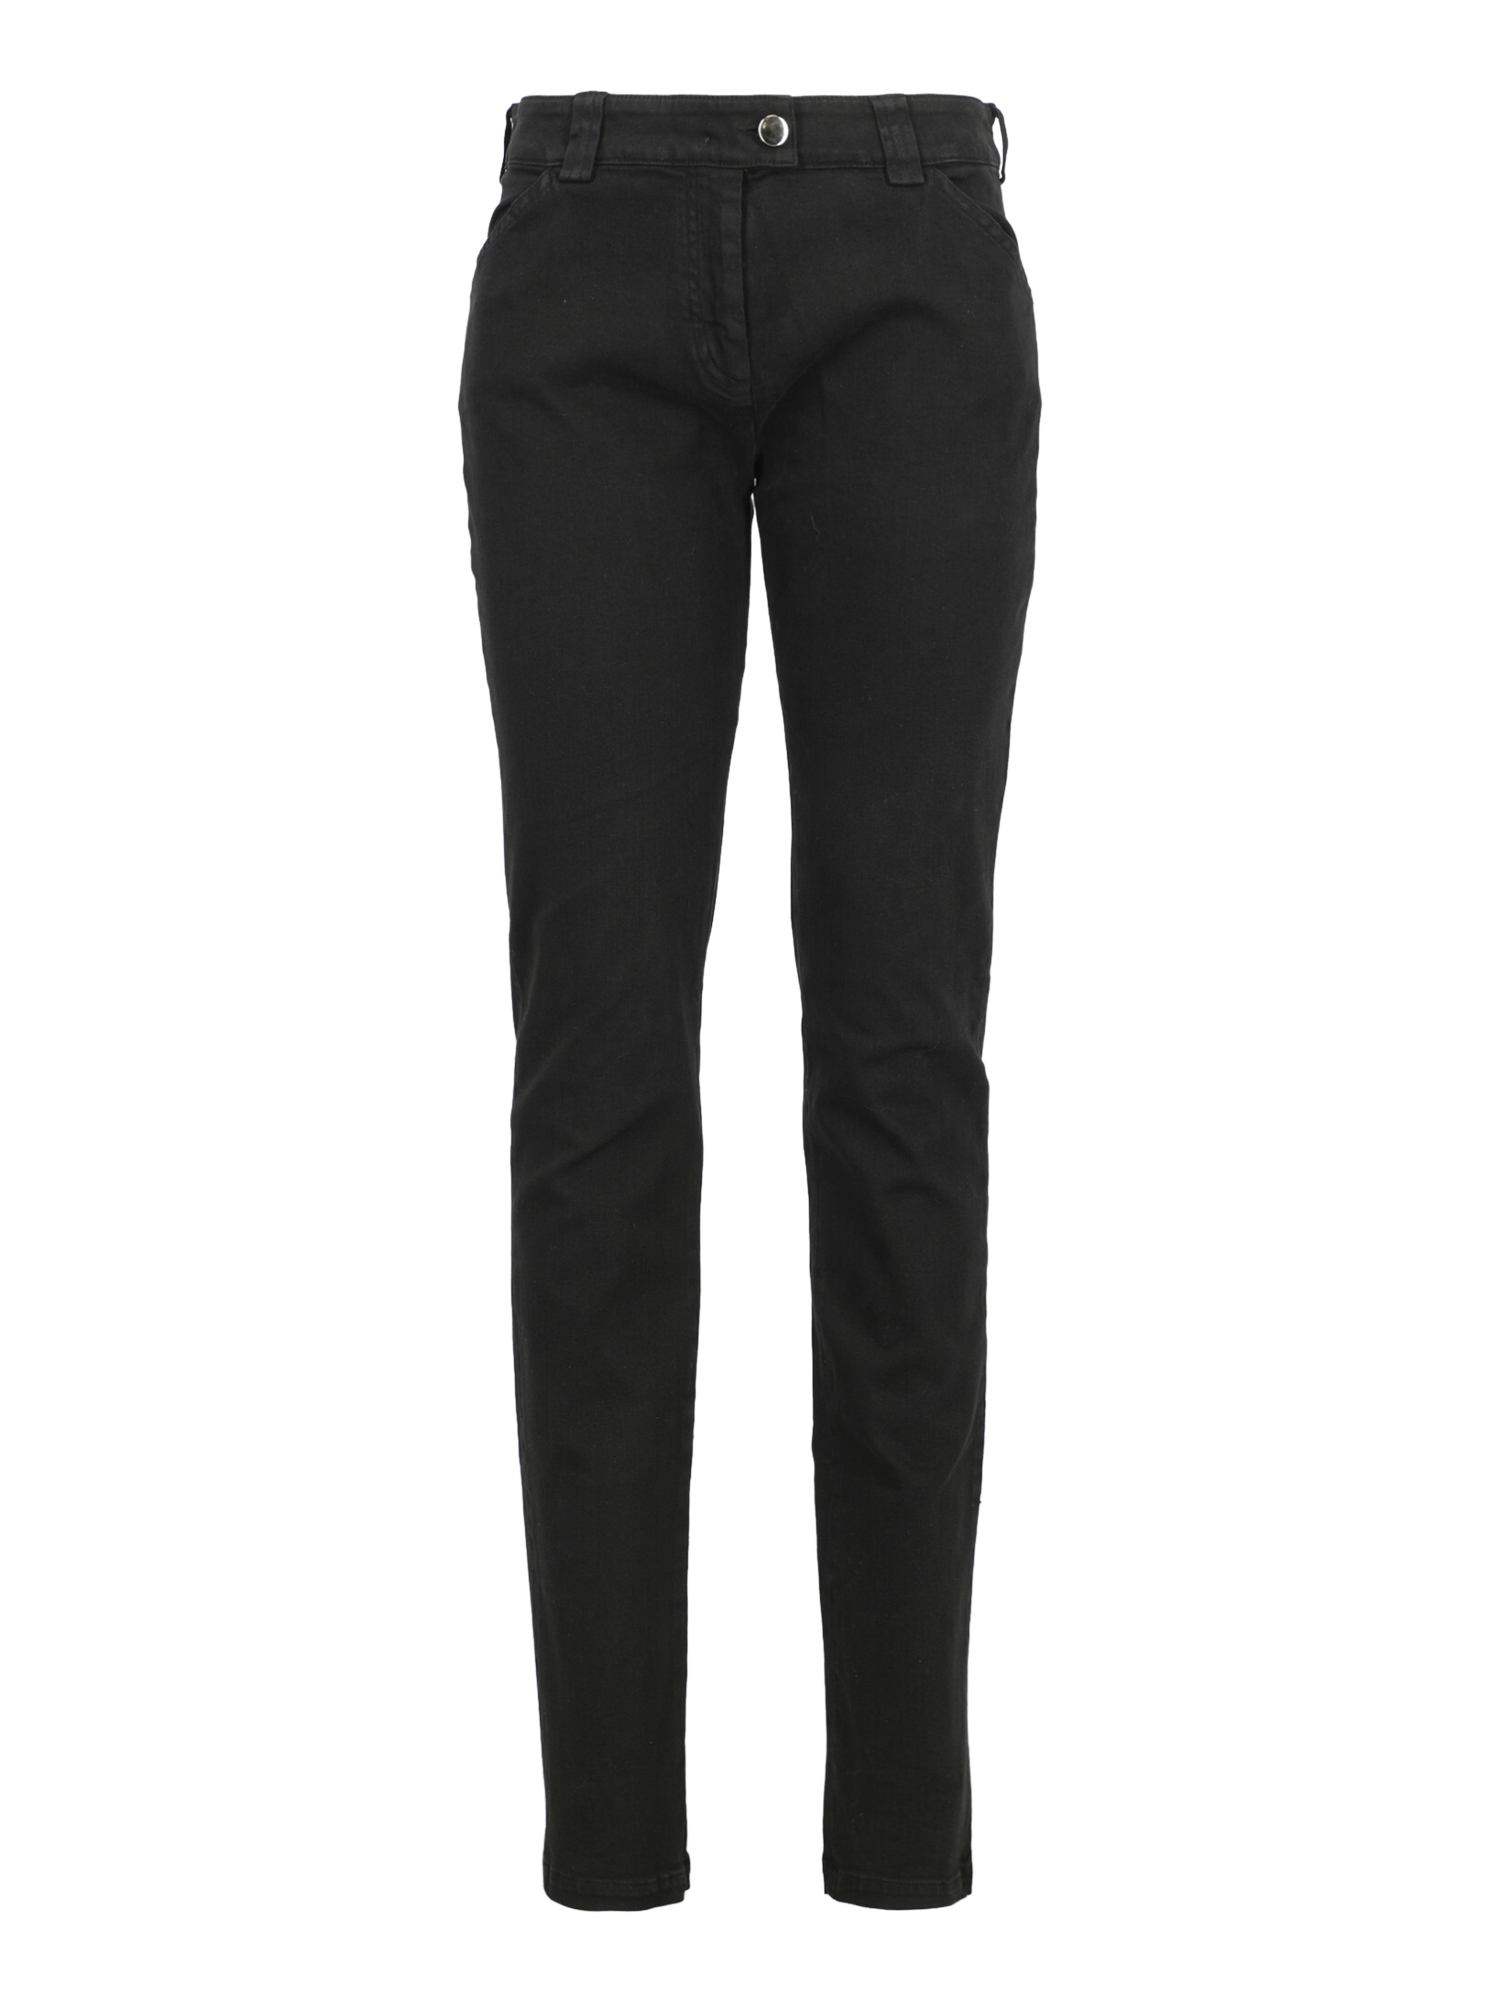 Pantalons Pour Femme - Balenciaga - En Cotton Black - Taille:  -